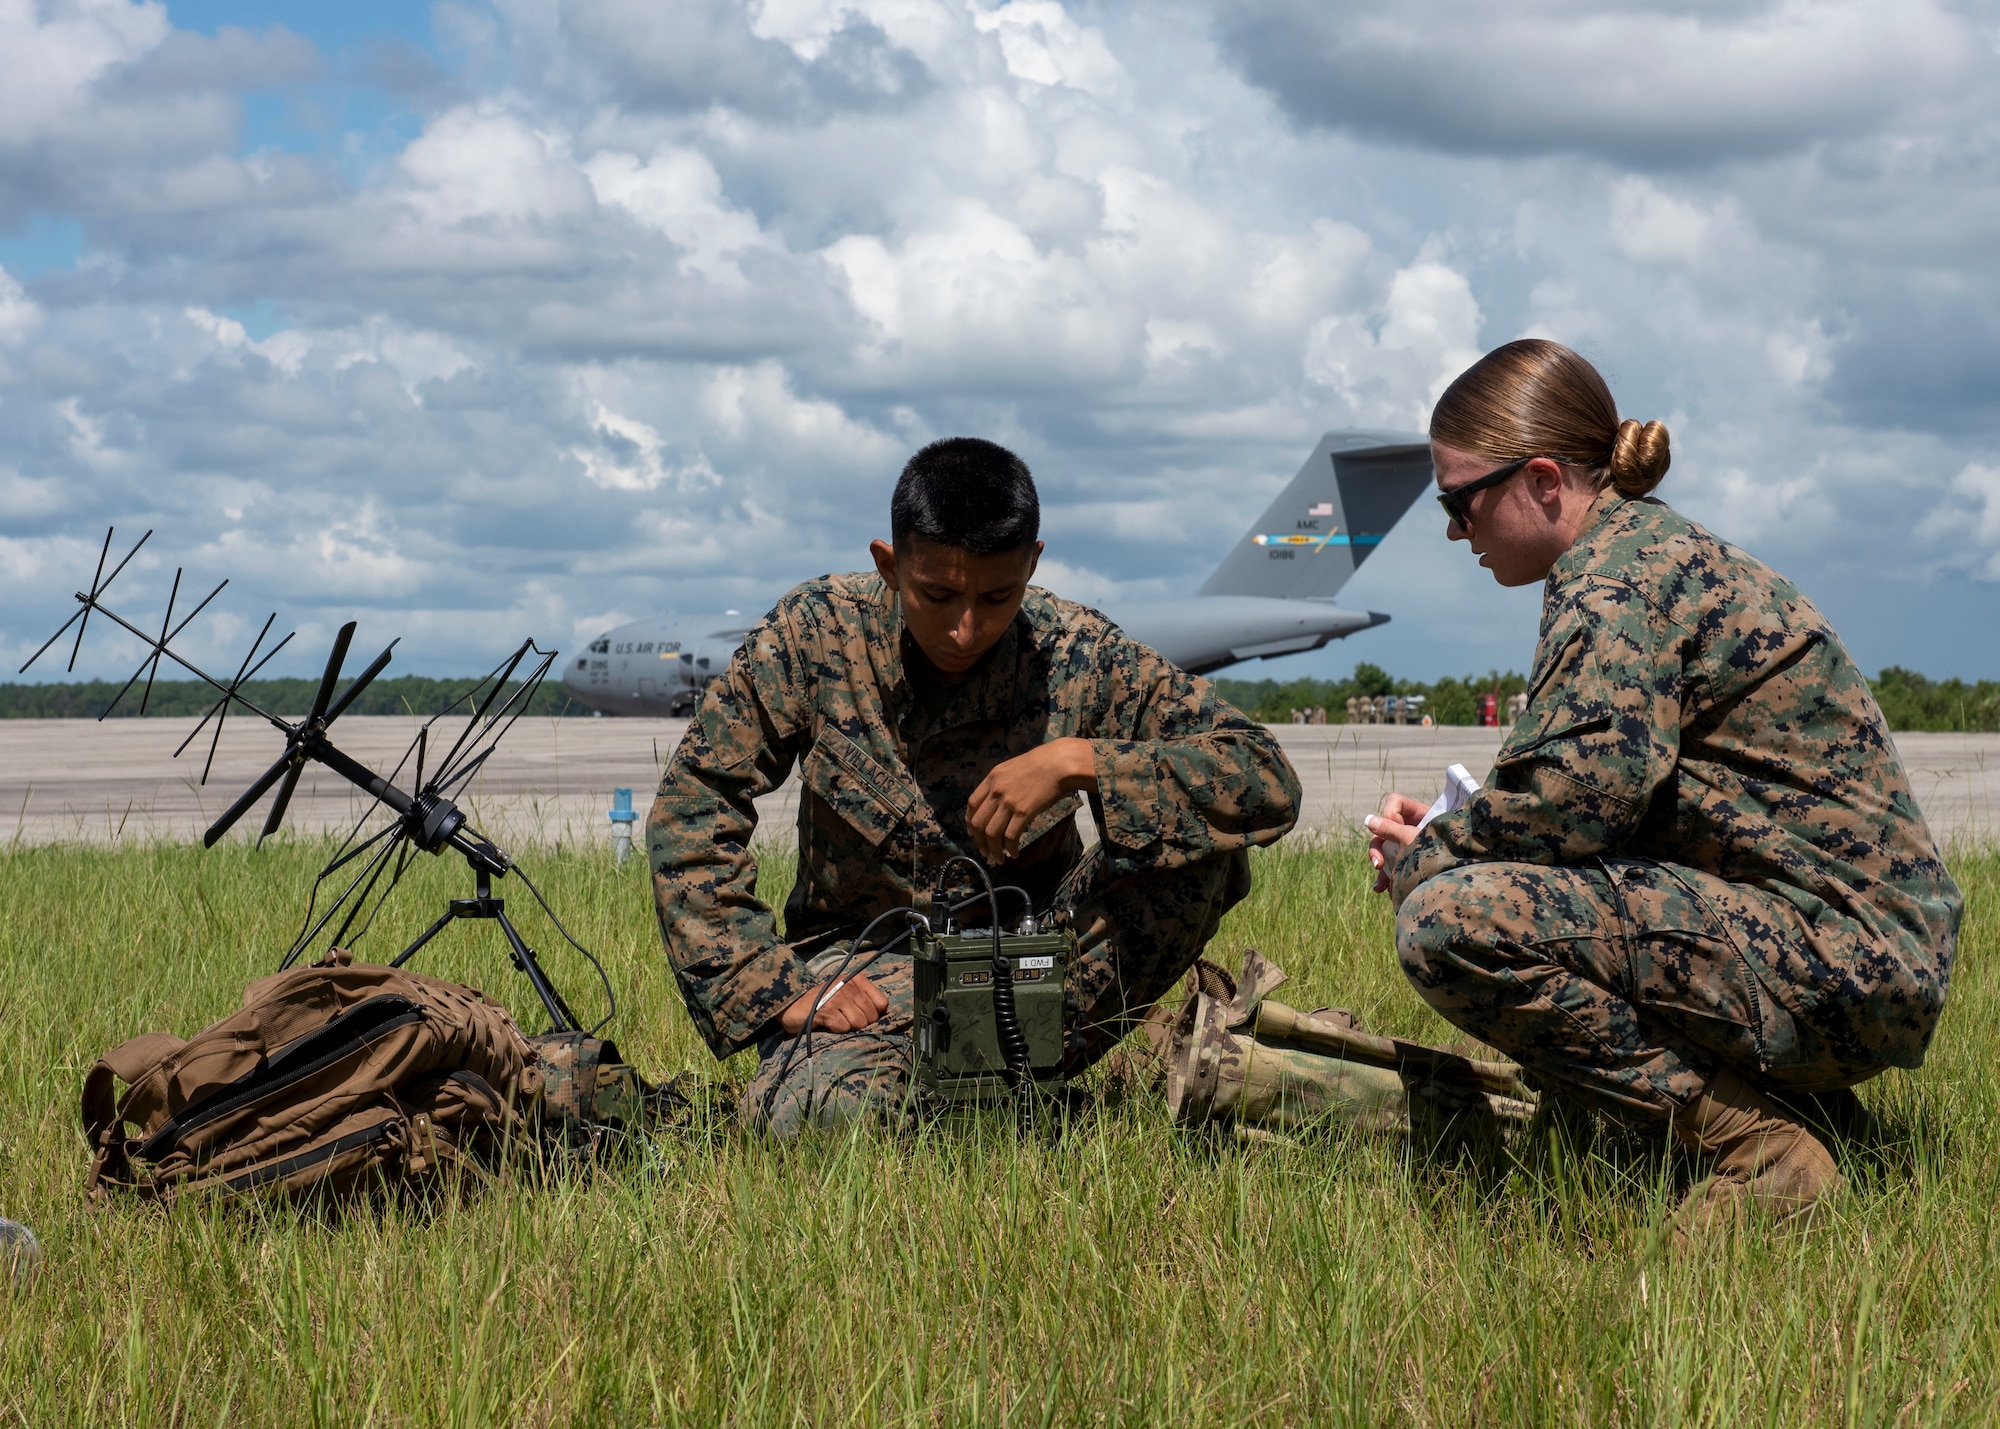 Marines from the 6th Marine Regiment, Camp Lejeune, setup communication equipment during Razor Talon at Cherry Point Marine Corp Air Station, North Carolina, Aug. 12, 2020.